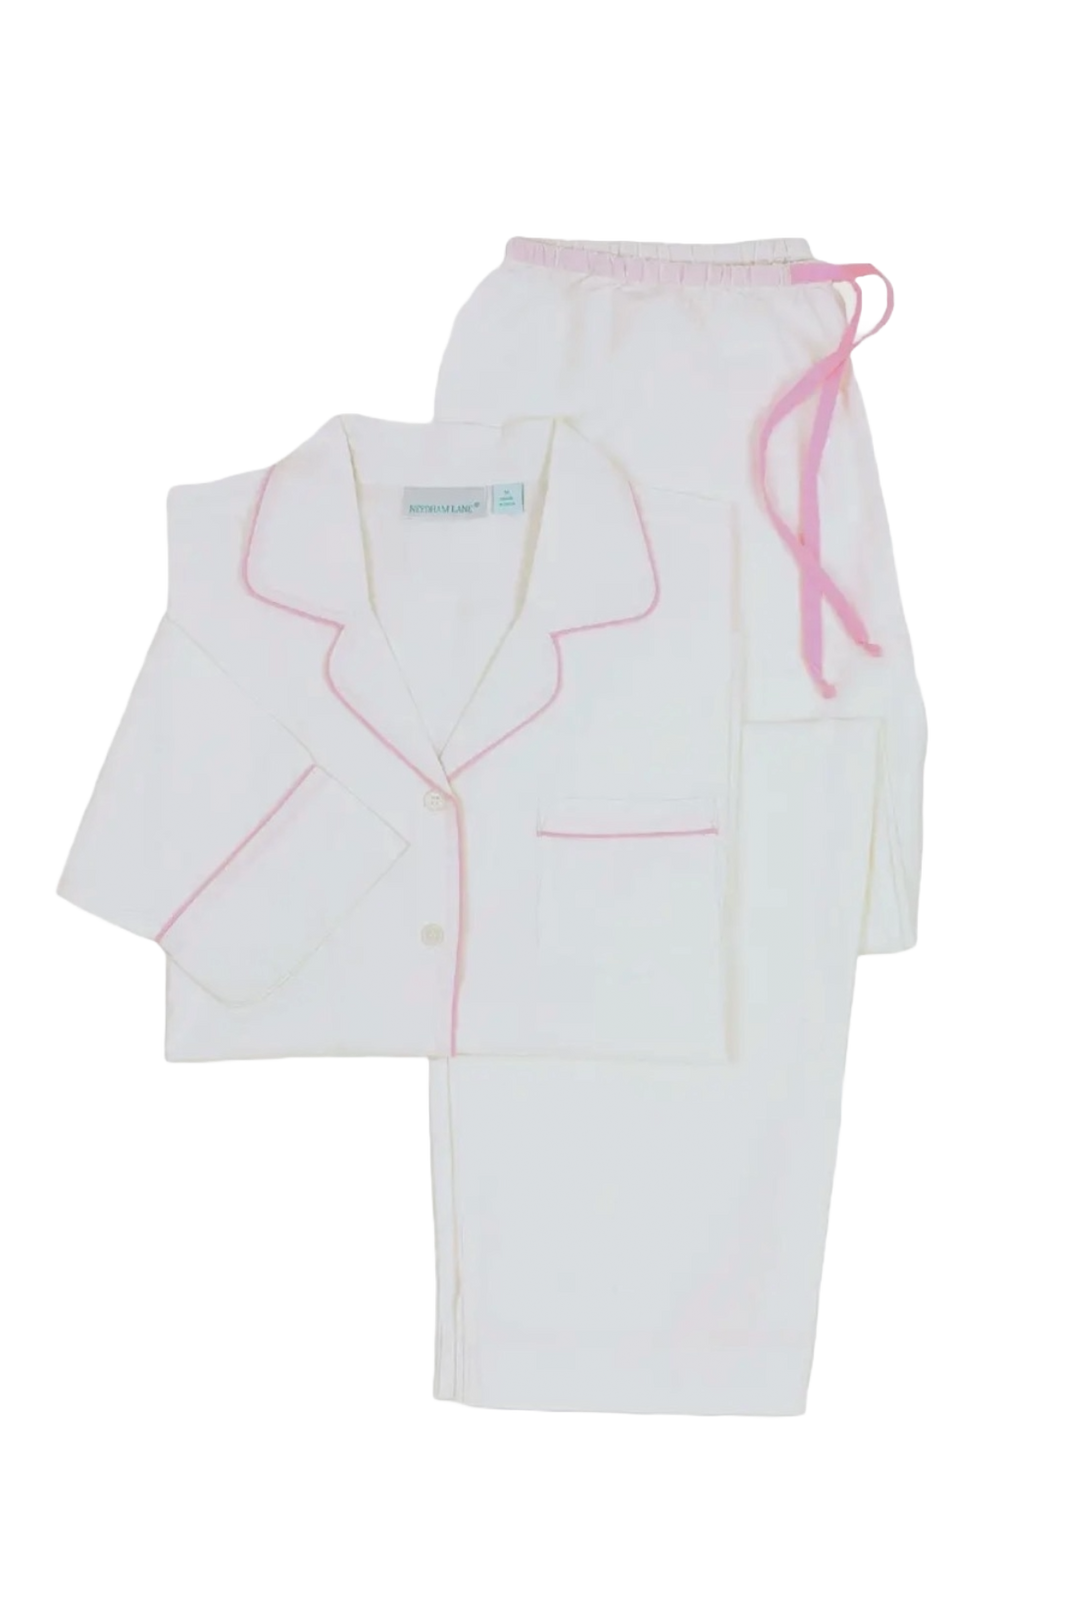 White and Pink Pajama Set